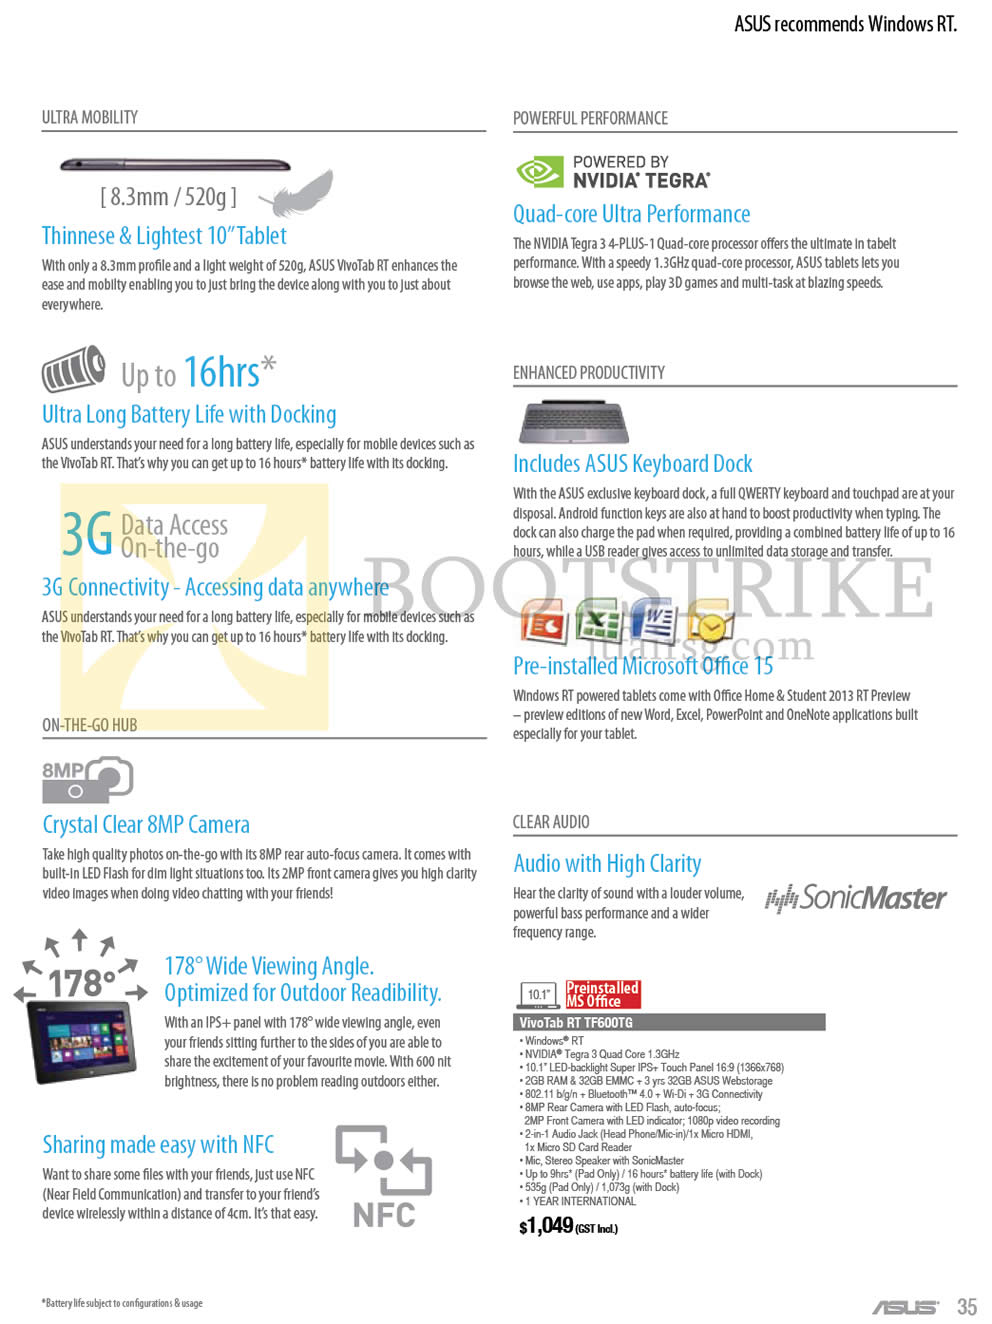 IT SHOW 2013 price list image brochure of ASUS Notebooks VivoTab RT Tablet Features, VivoTab RT TF600TG